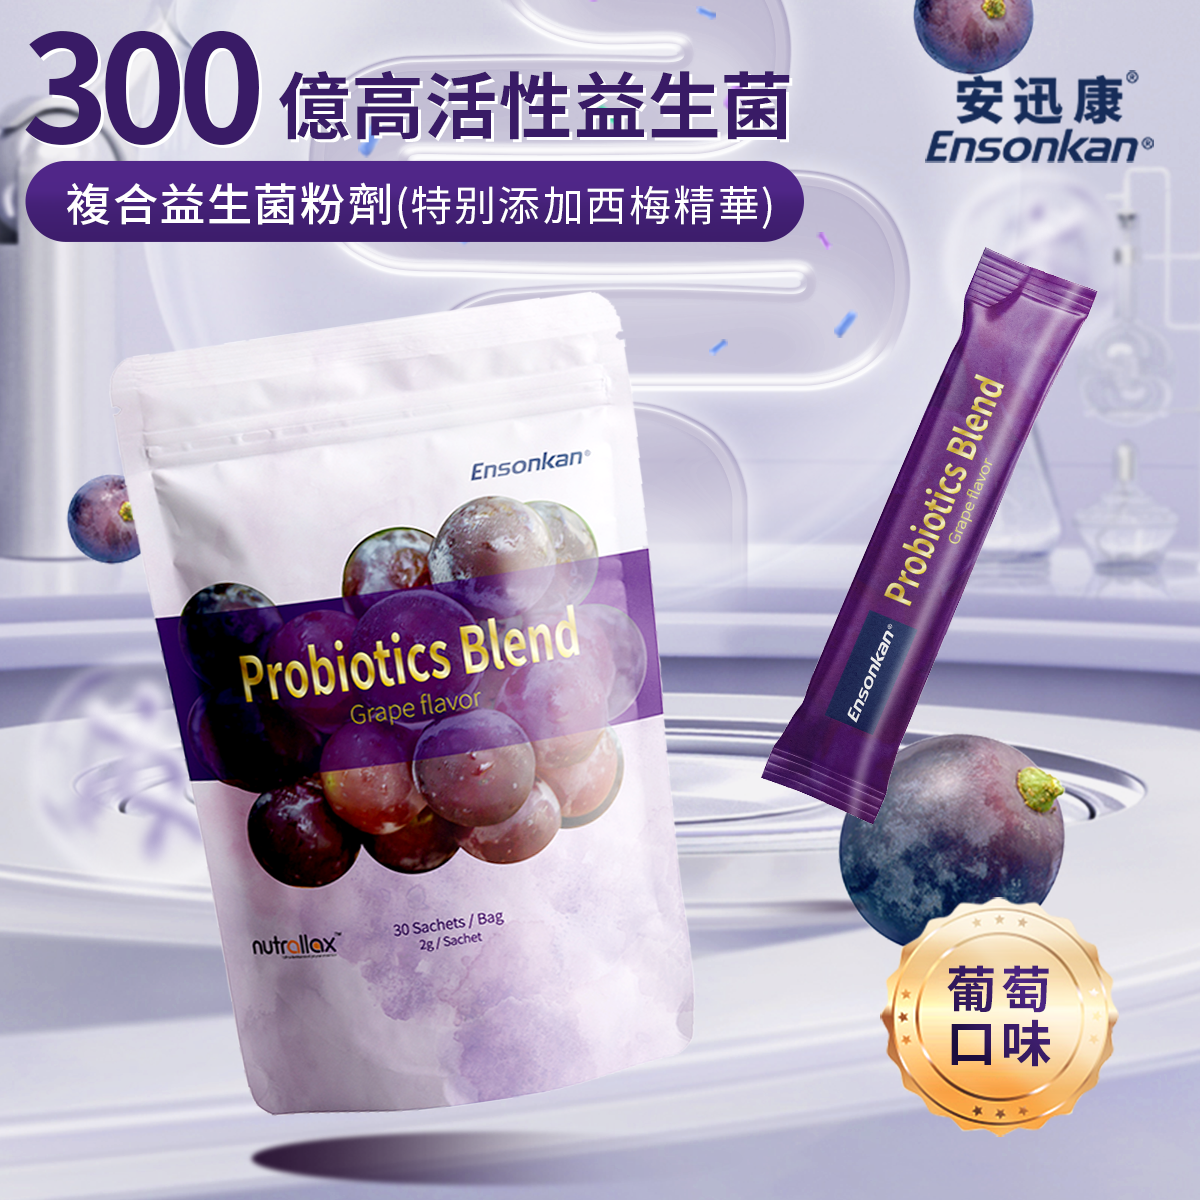 Ensonkan Probiotics Blend (Grape Flavor) - 30 sticks/bag